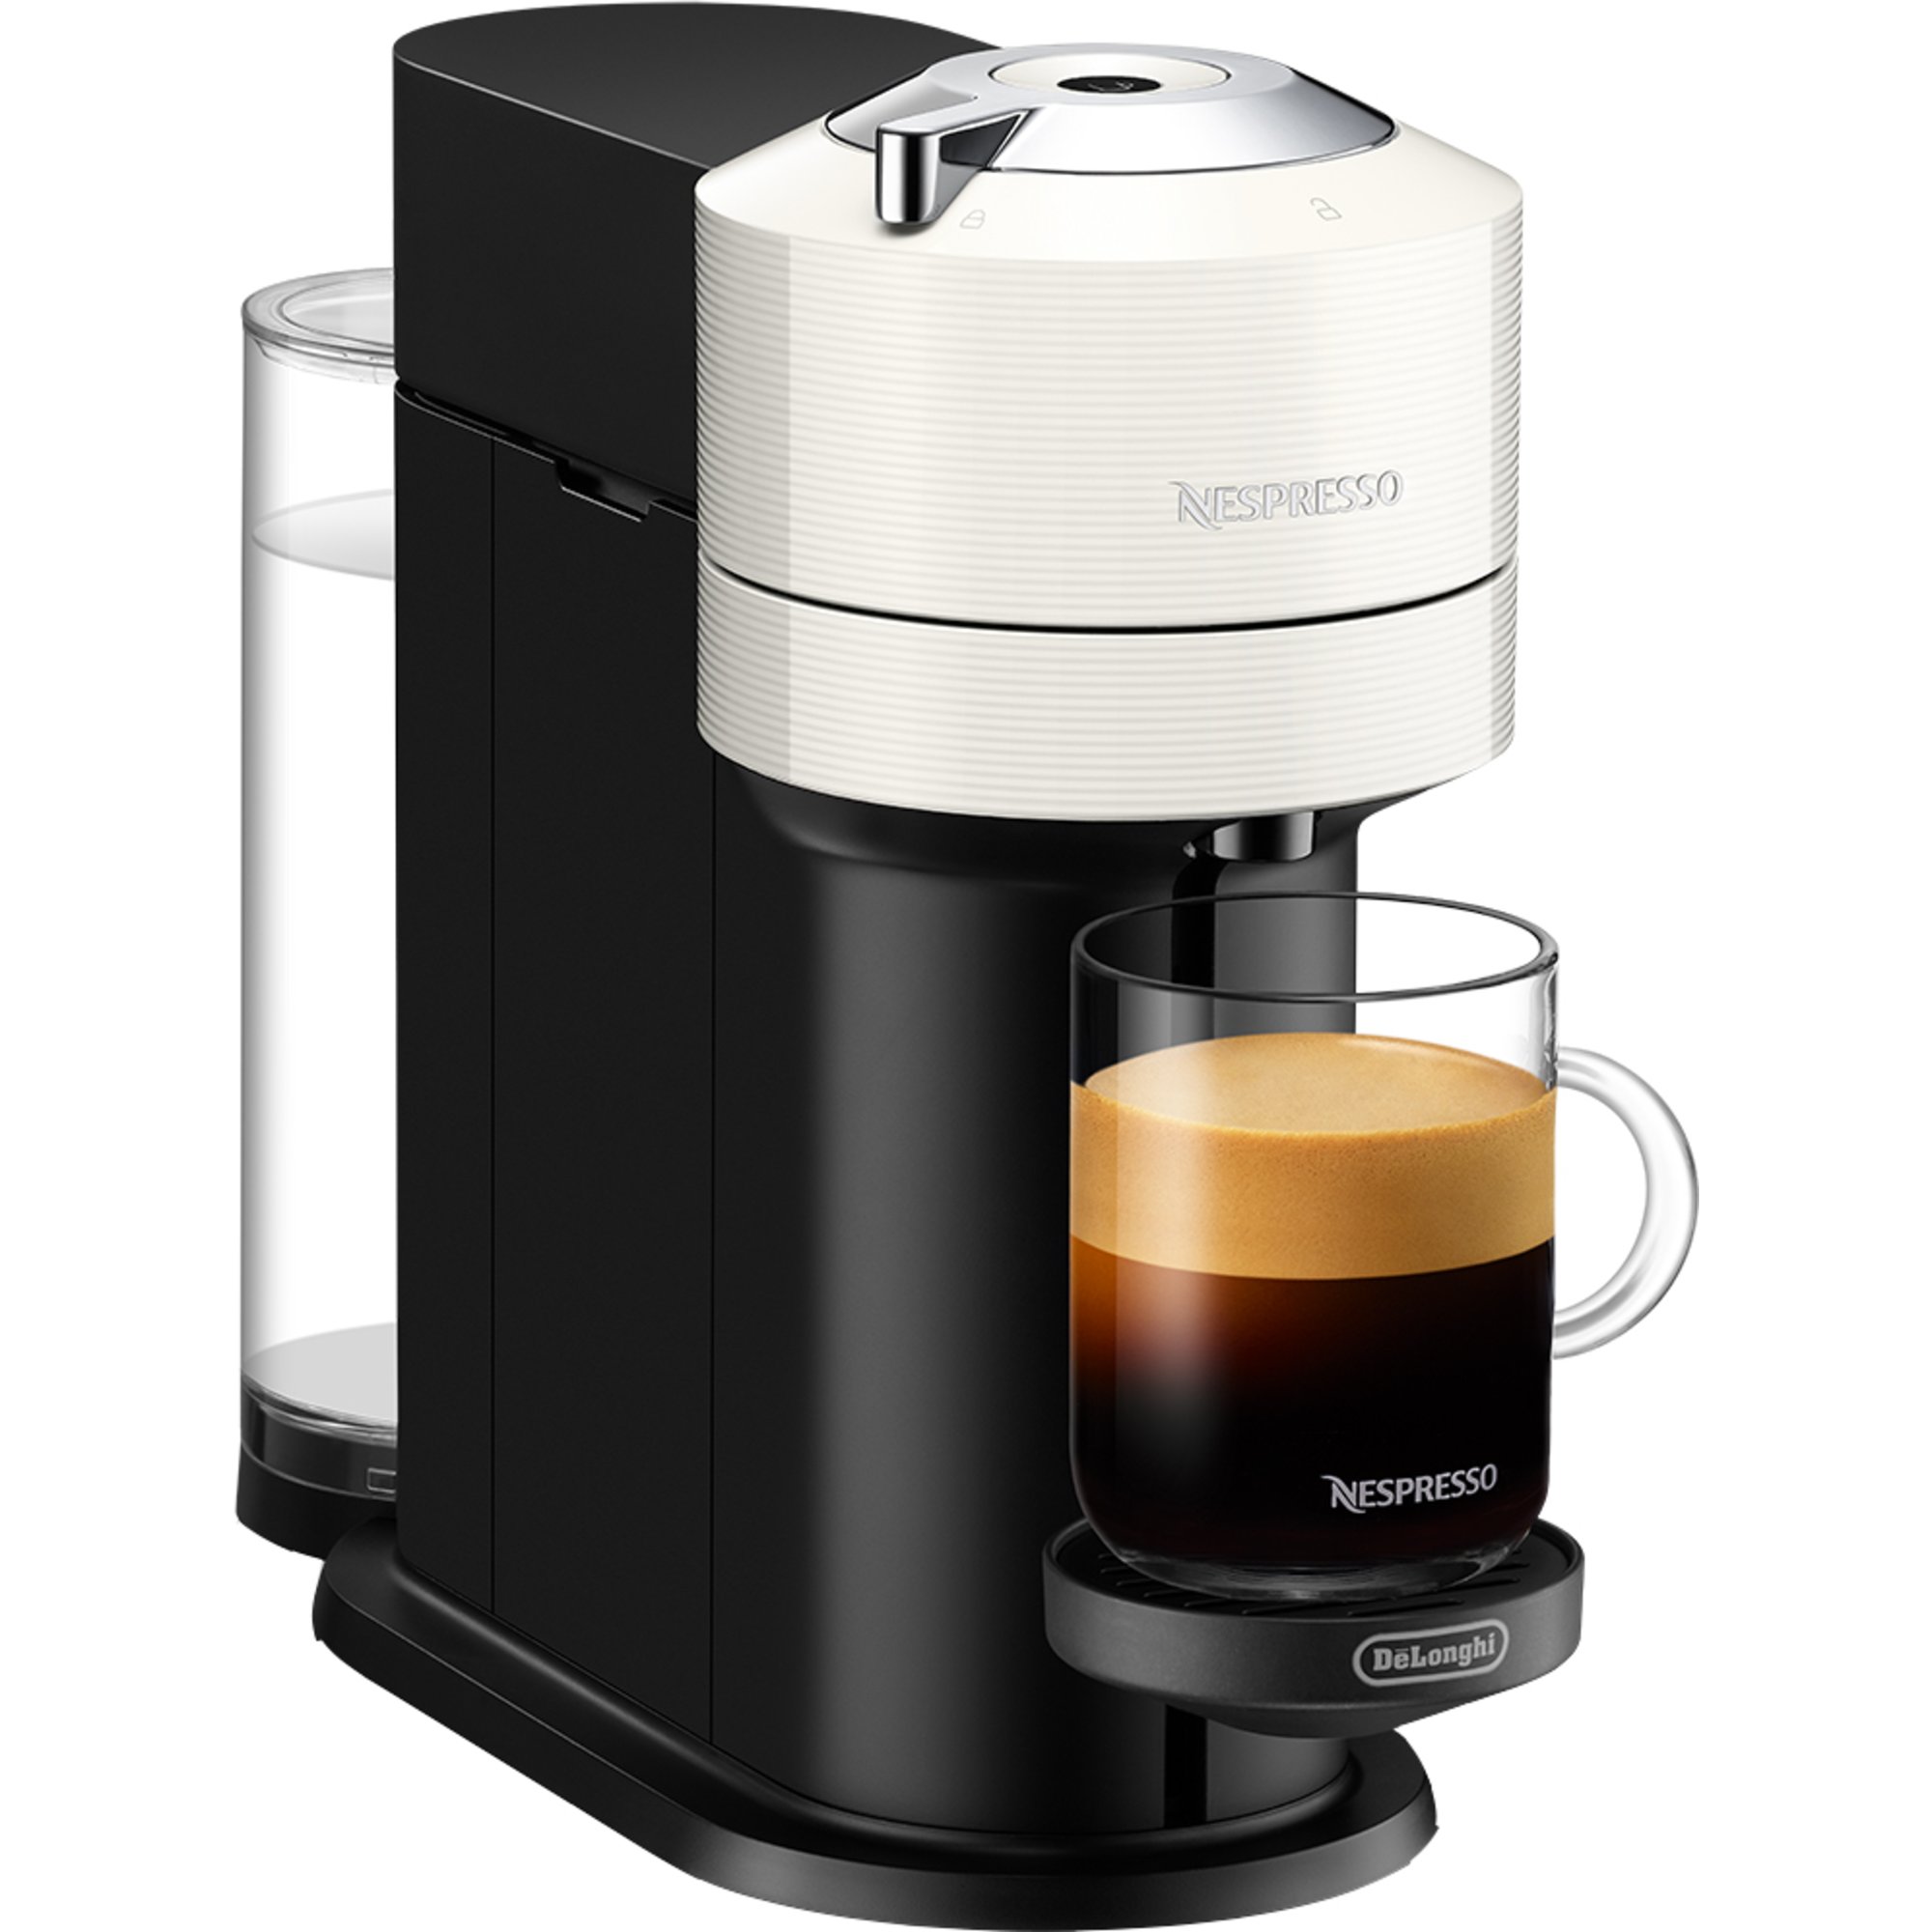 Nespresso Vertuo Next kaffemaskin, 1 liter, vit